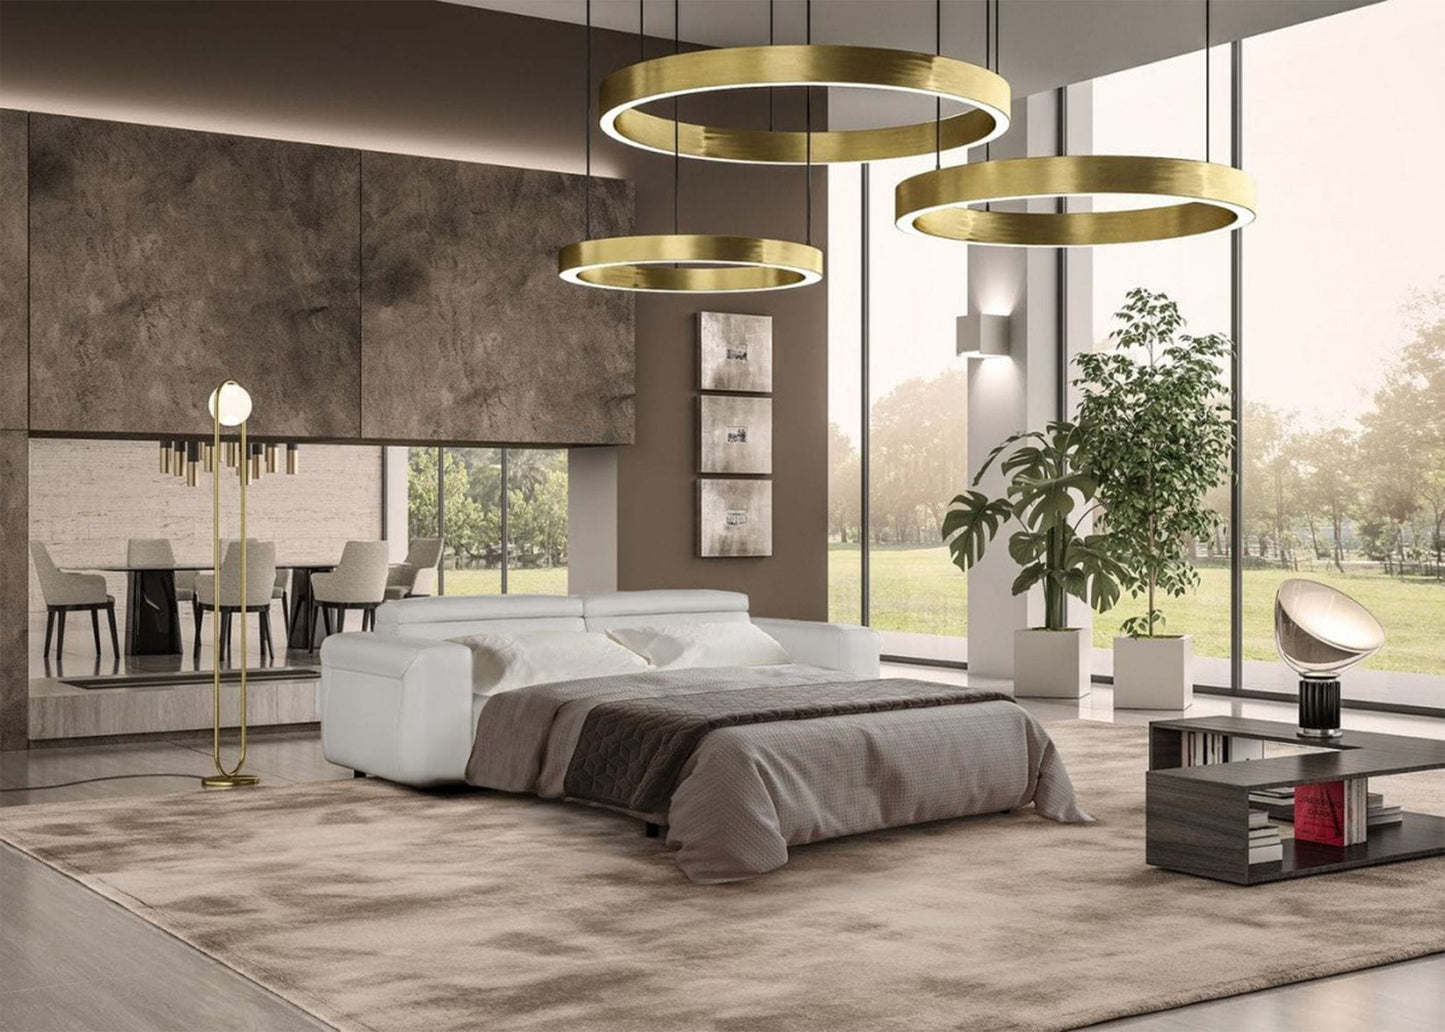 VIG Furniture Coronelli Icon Italian Grey Leather Sofa Bed